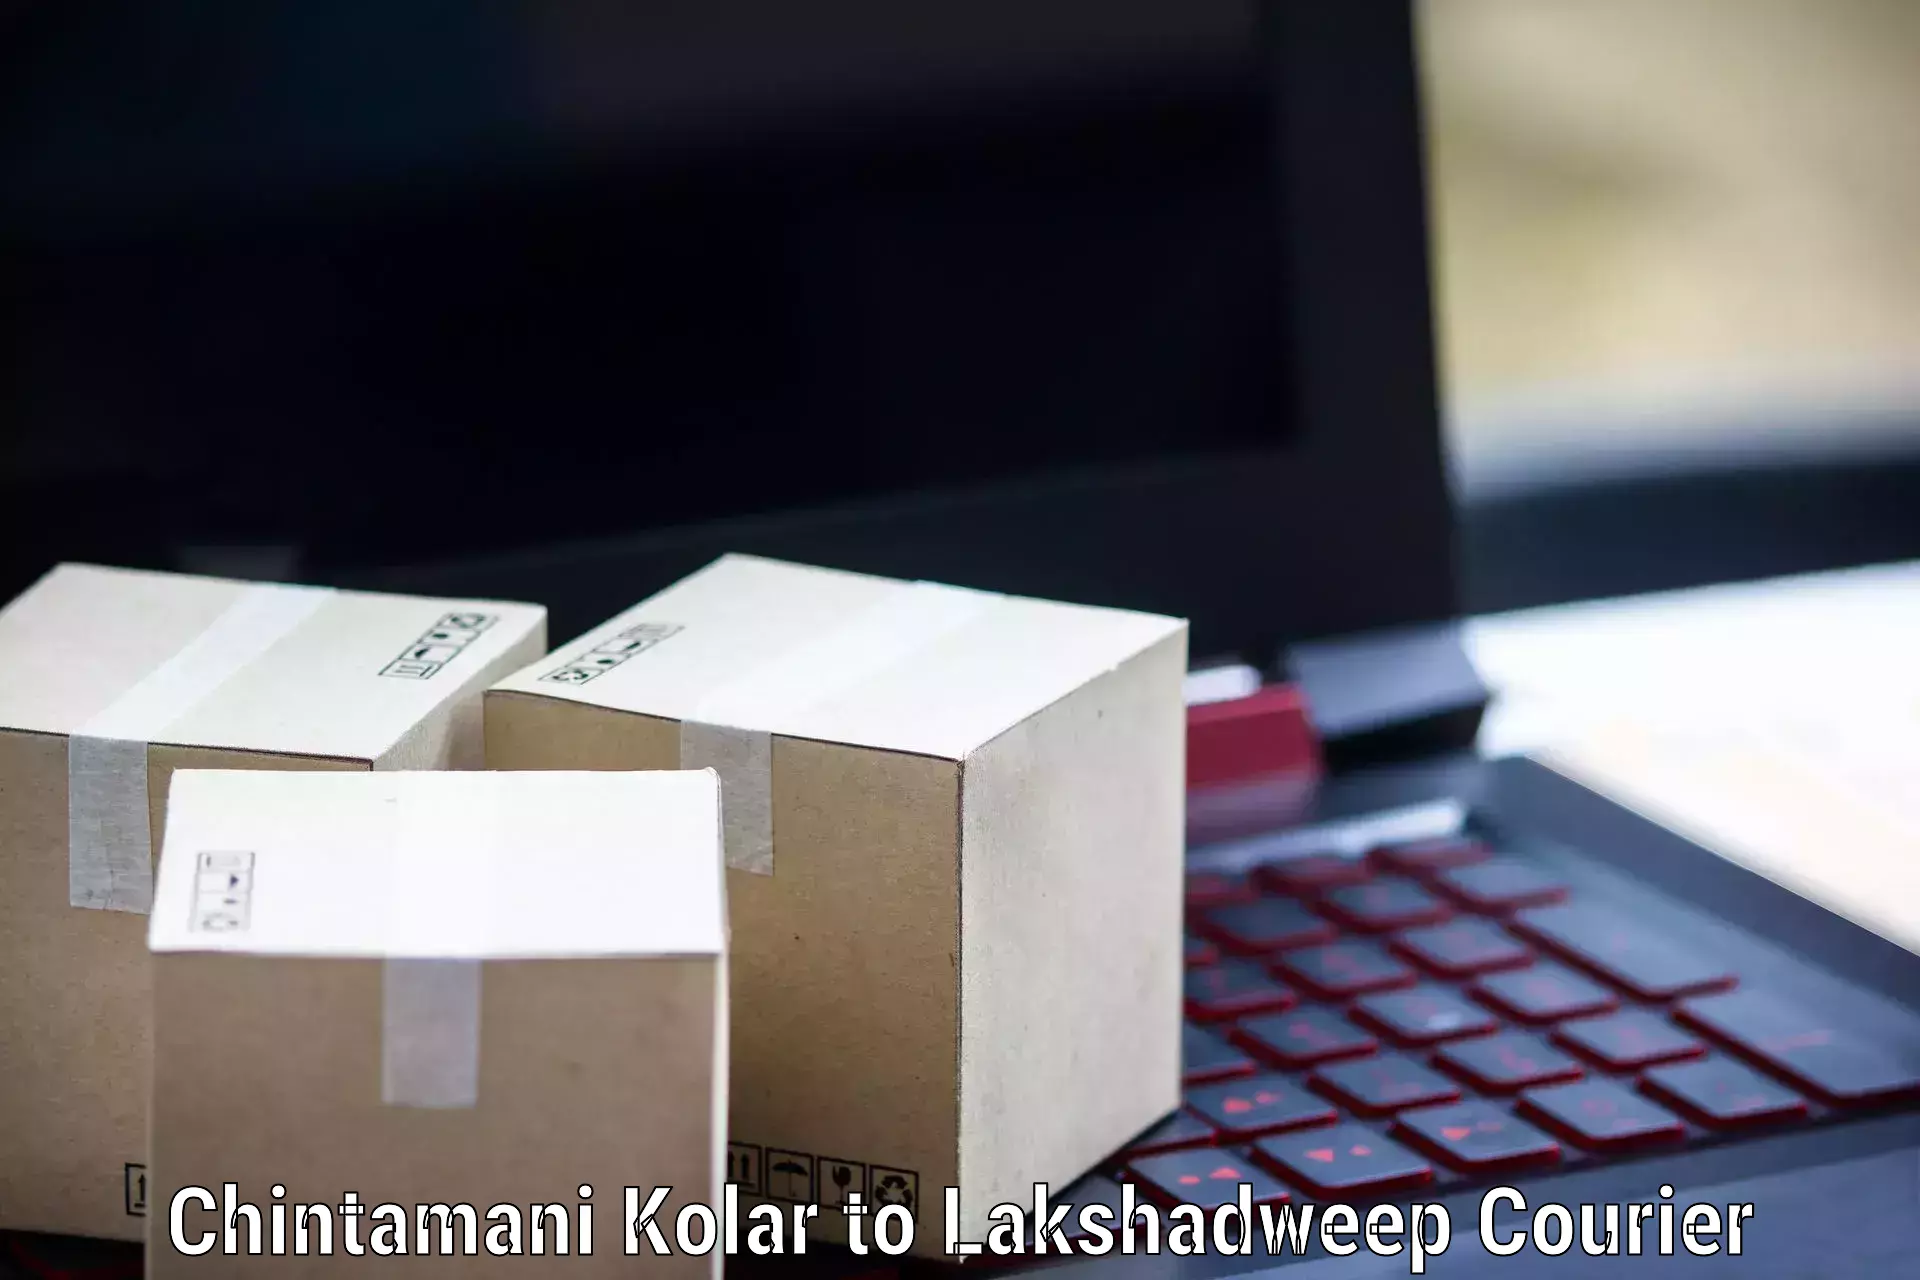 Courier service innovation Chintamani Kolar to Lakshadweep